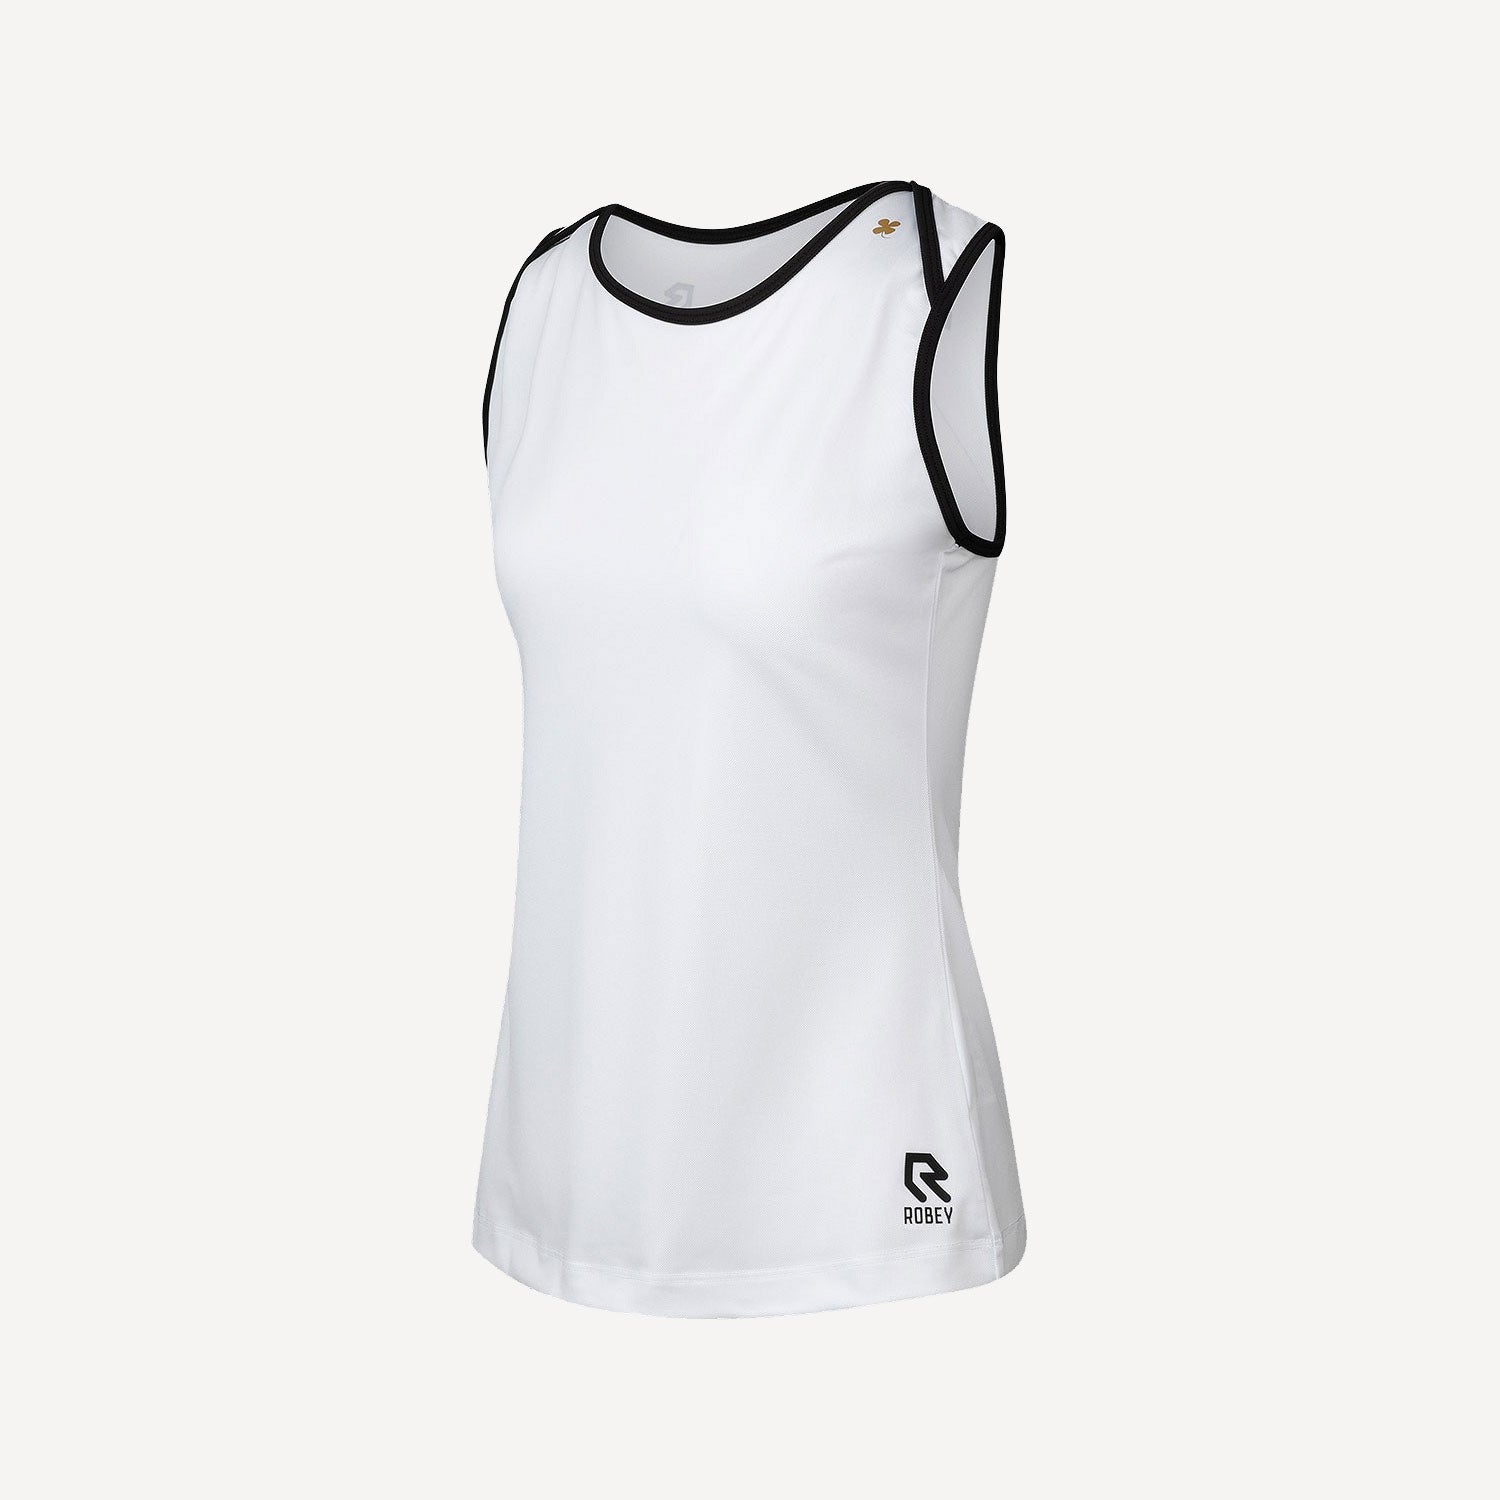 Robey Ralley Women's Tennis Tank - White (3)